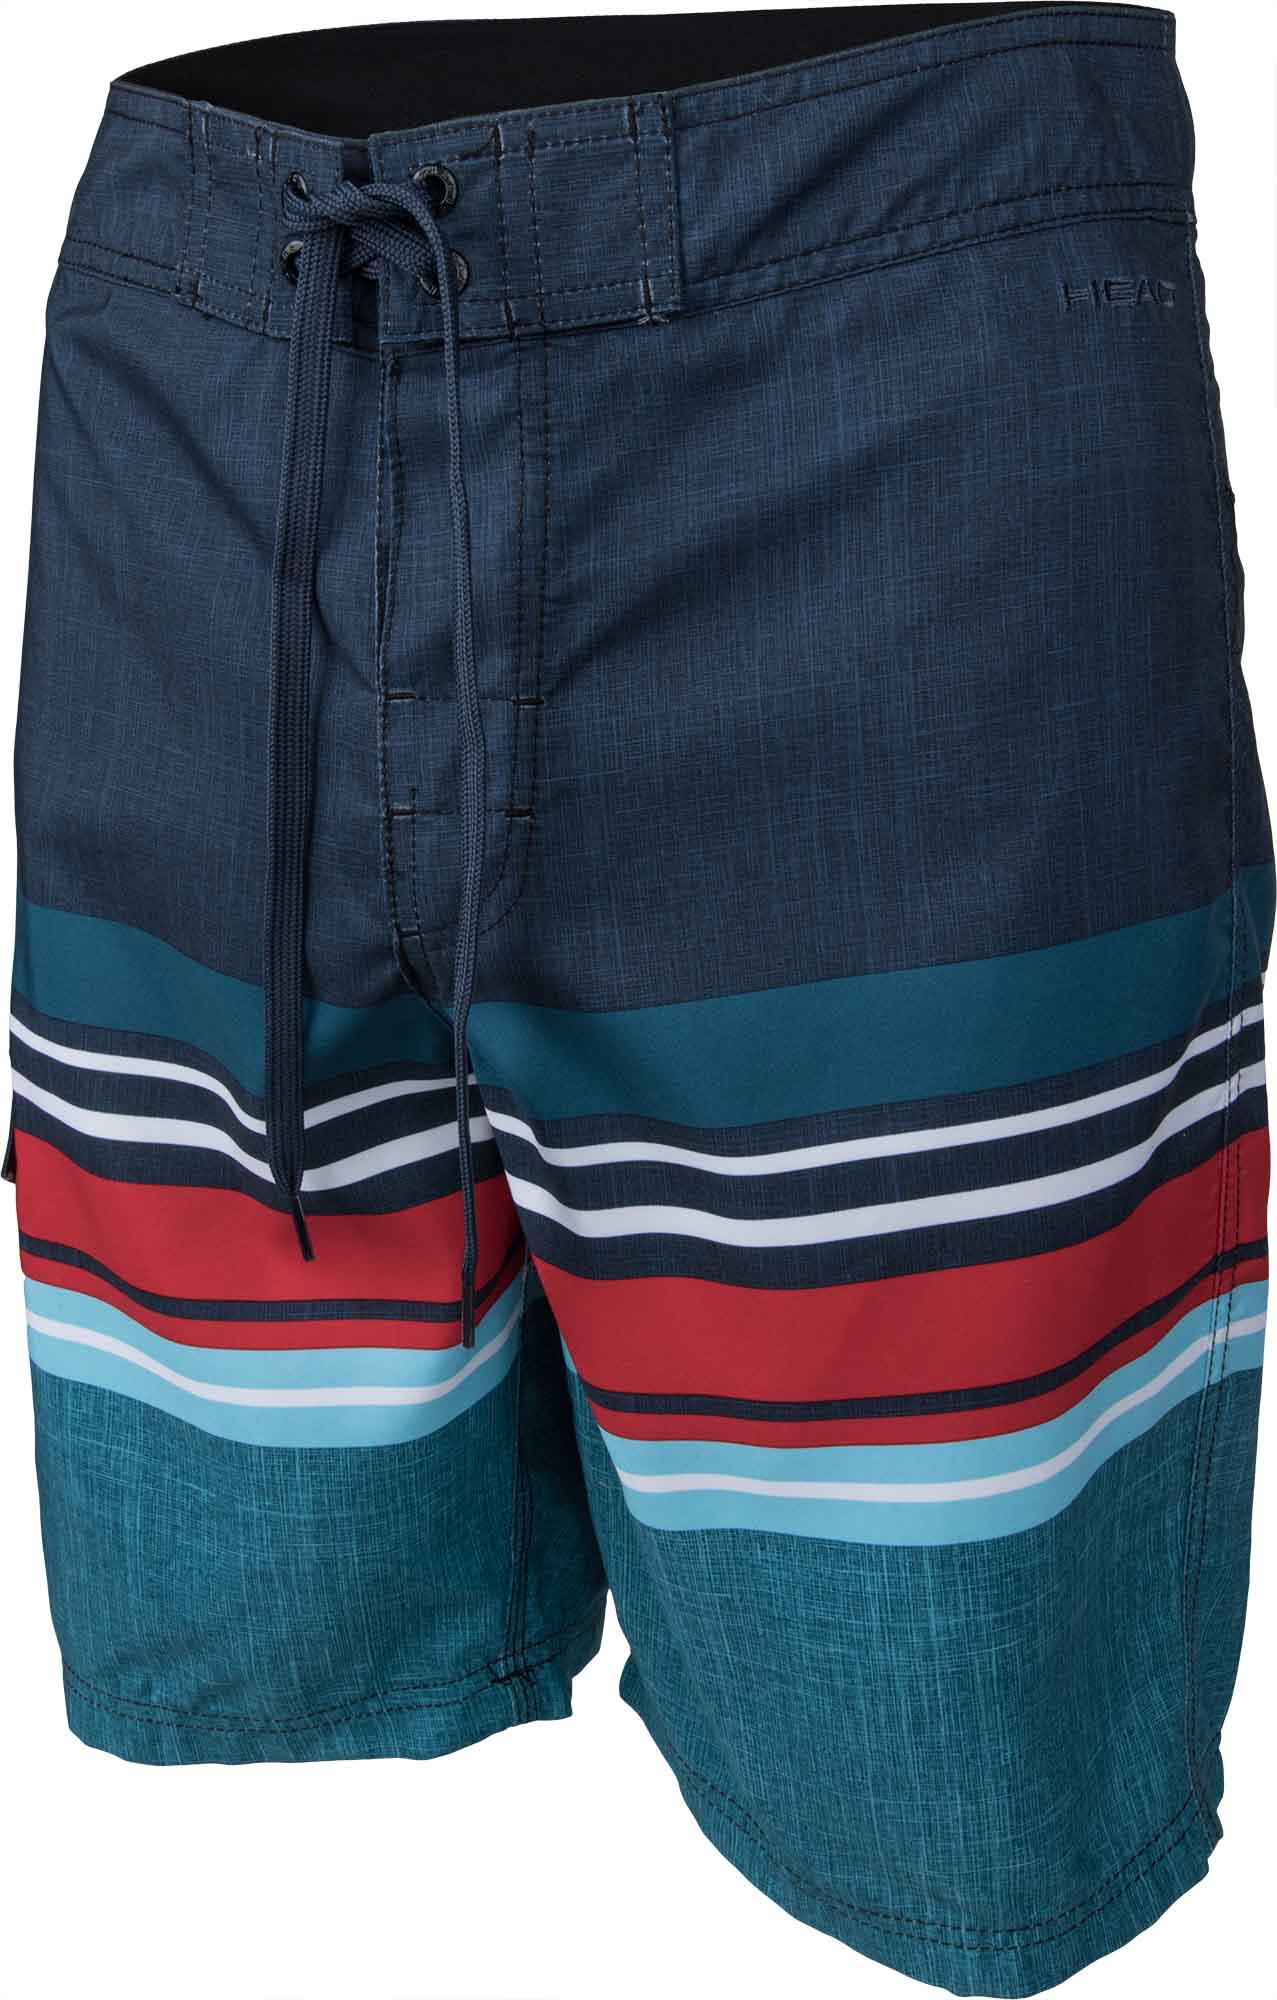 Men’s water shorts